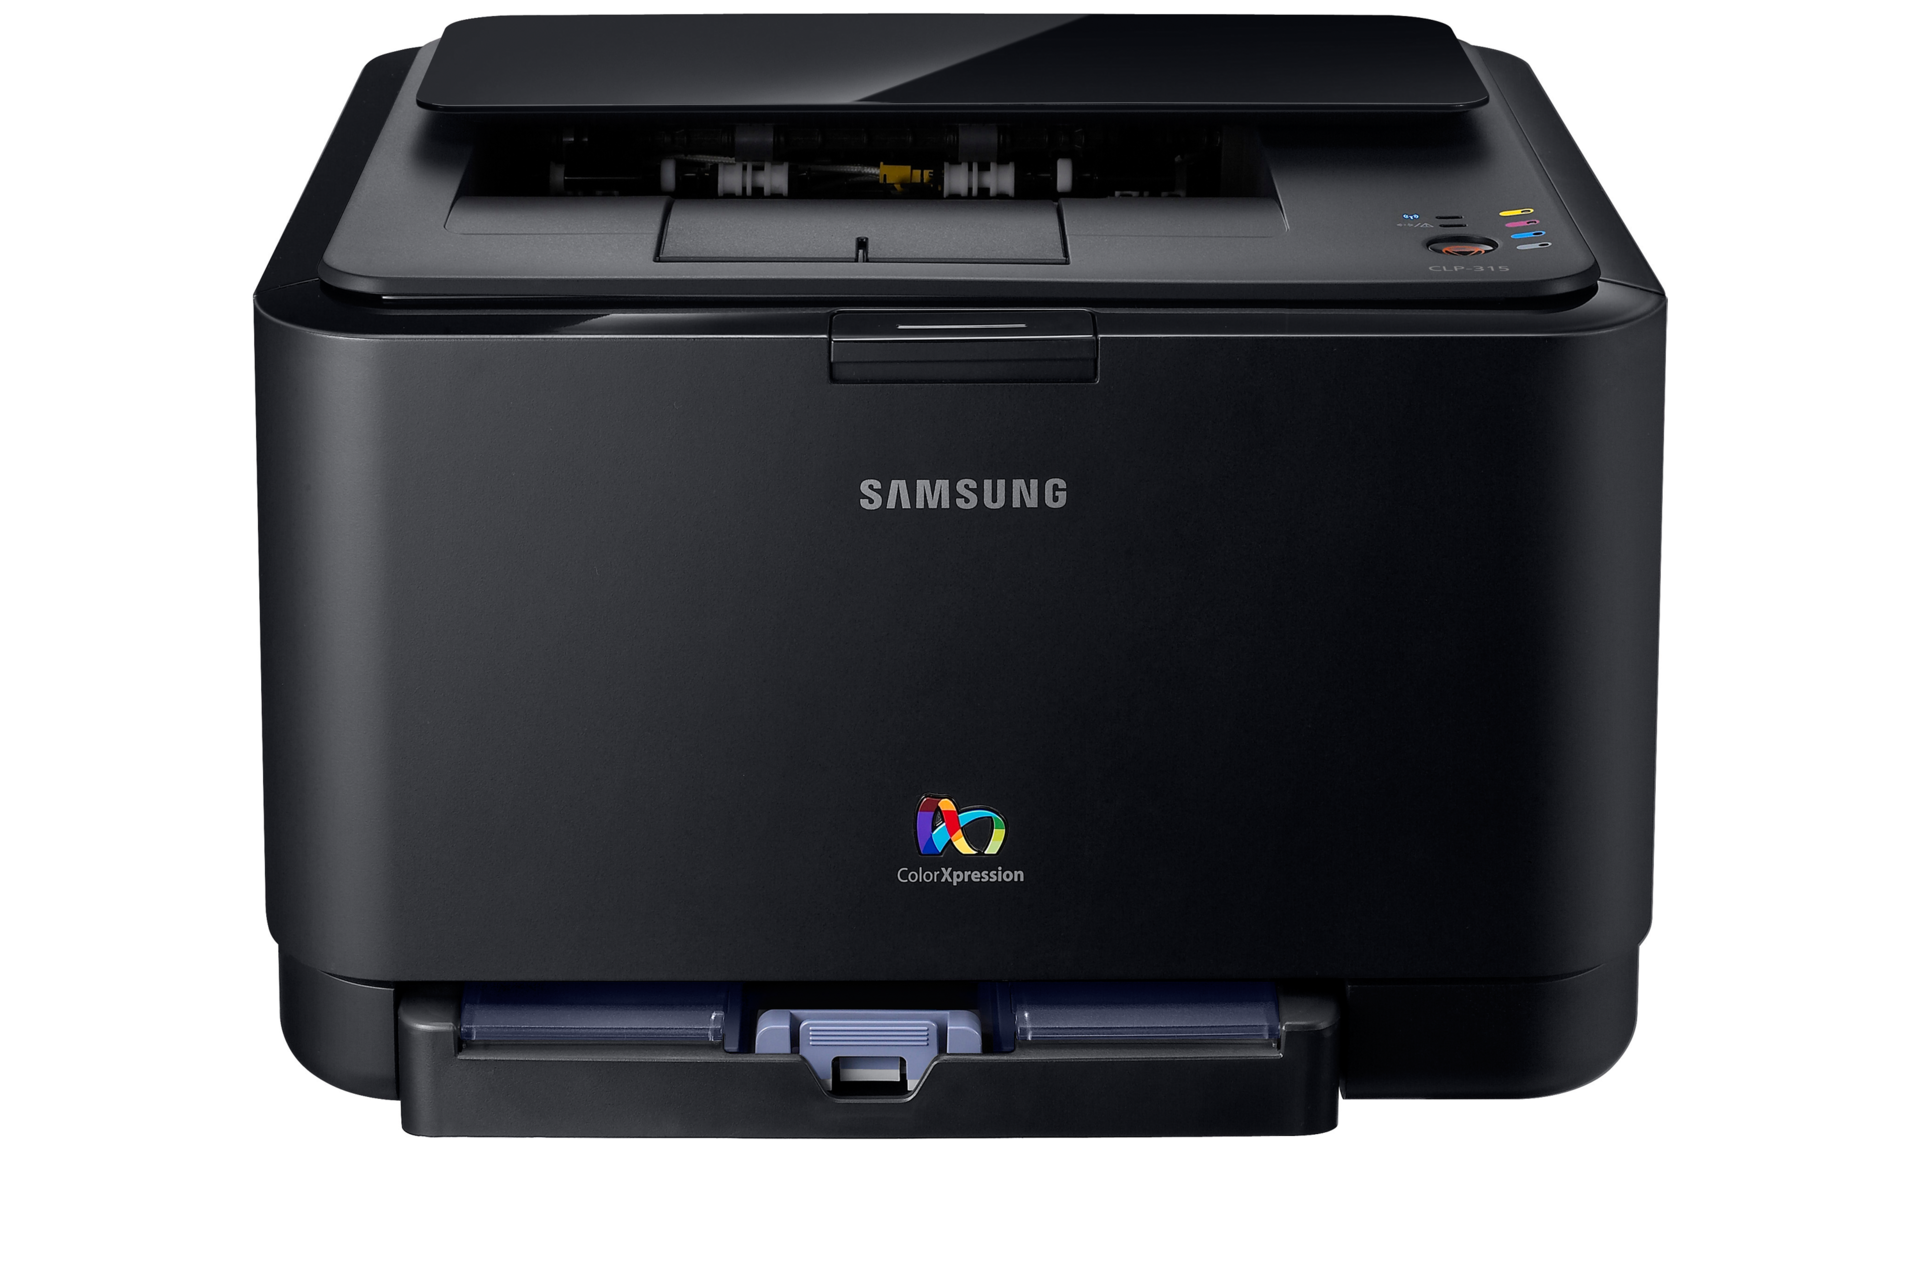 Samsung Colour Printer Price on Black Colour Laser Printer On Your Desk Mrp Rs 12999 Price Subject